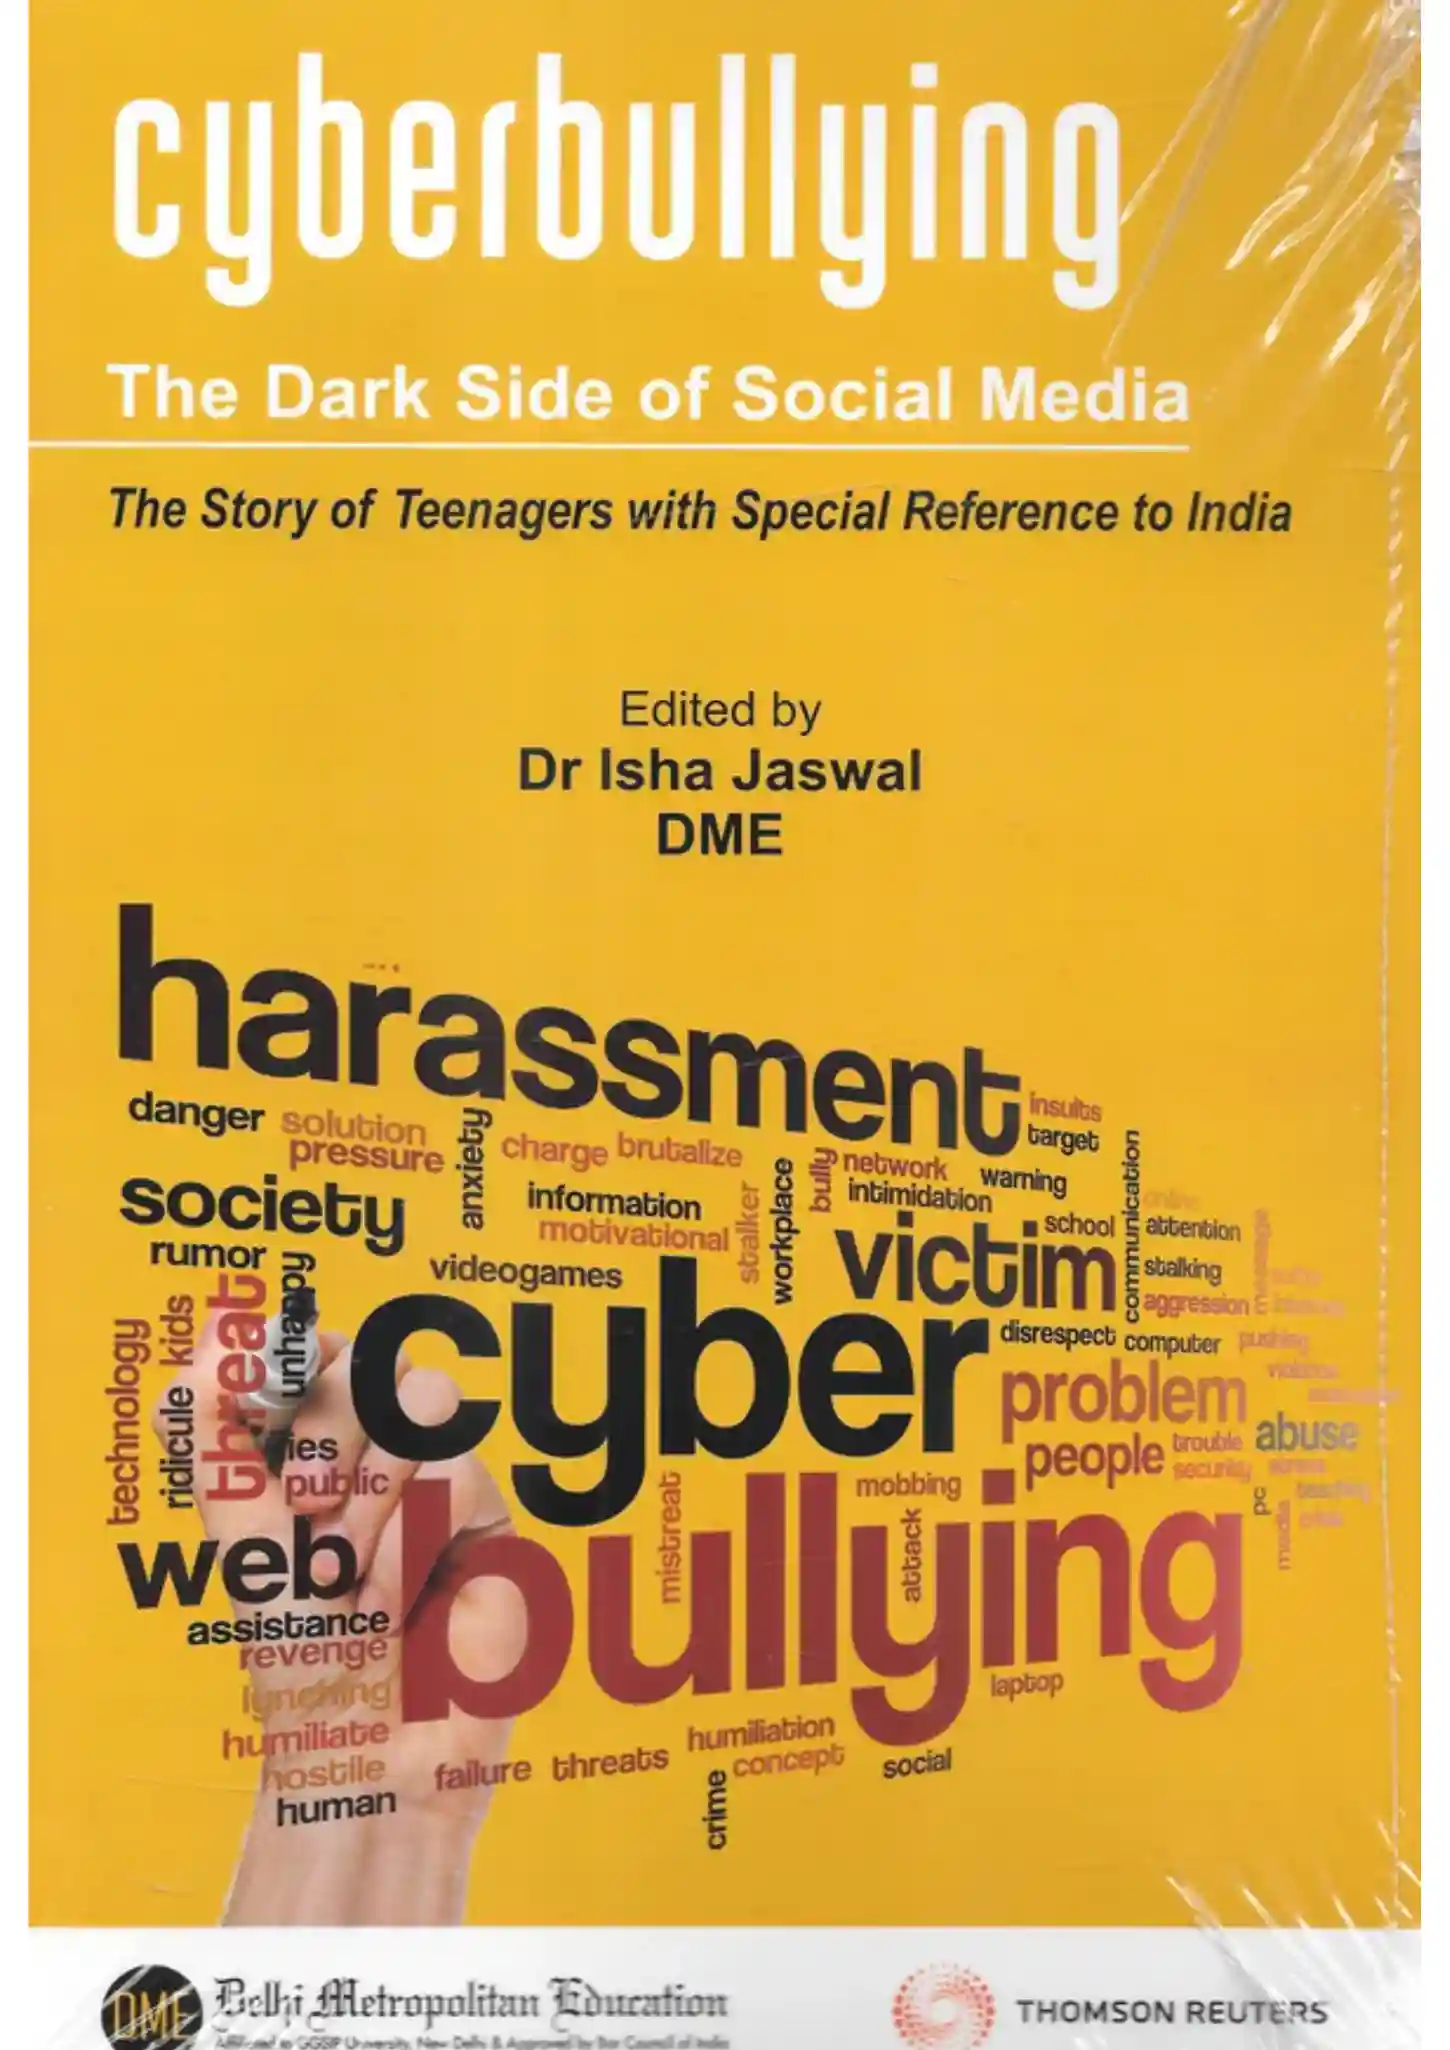 Cyberbullying - The Dark Side of Social Media